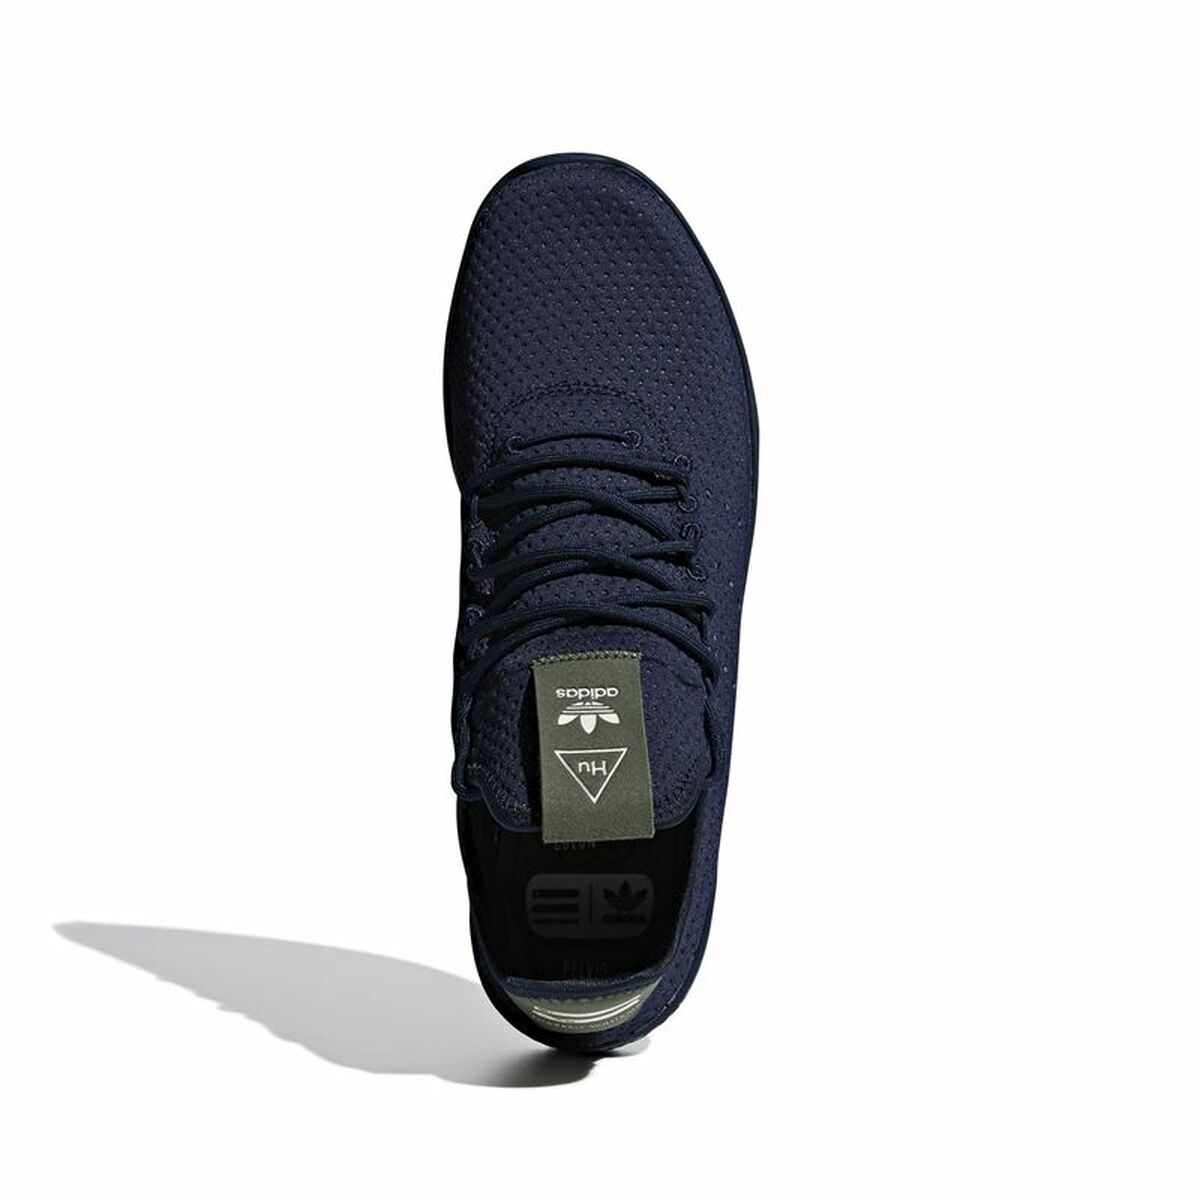 Scarpe Sportive Uomo Adidas Originals Pharrell Williams Blu scuro